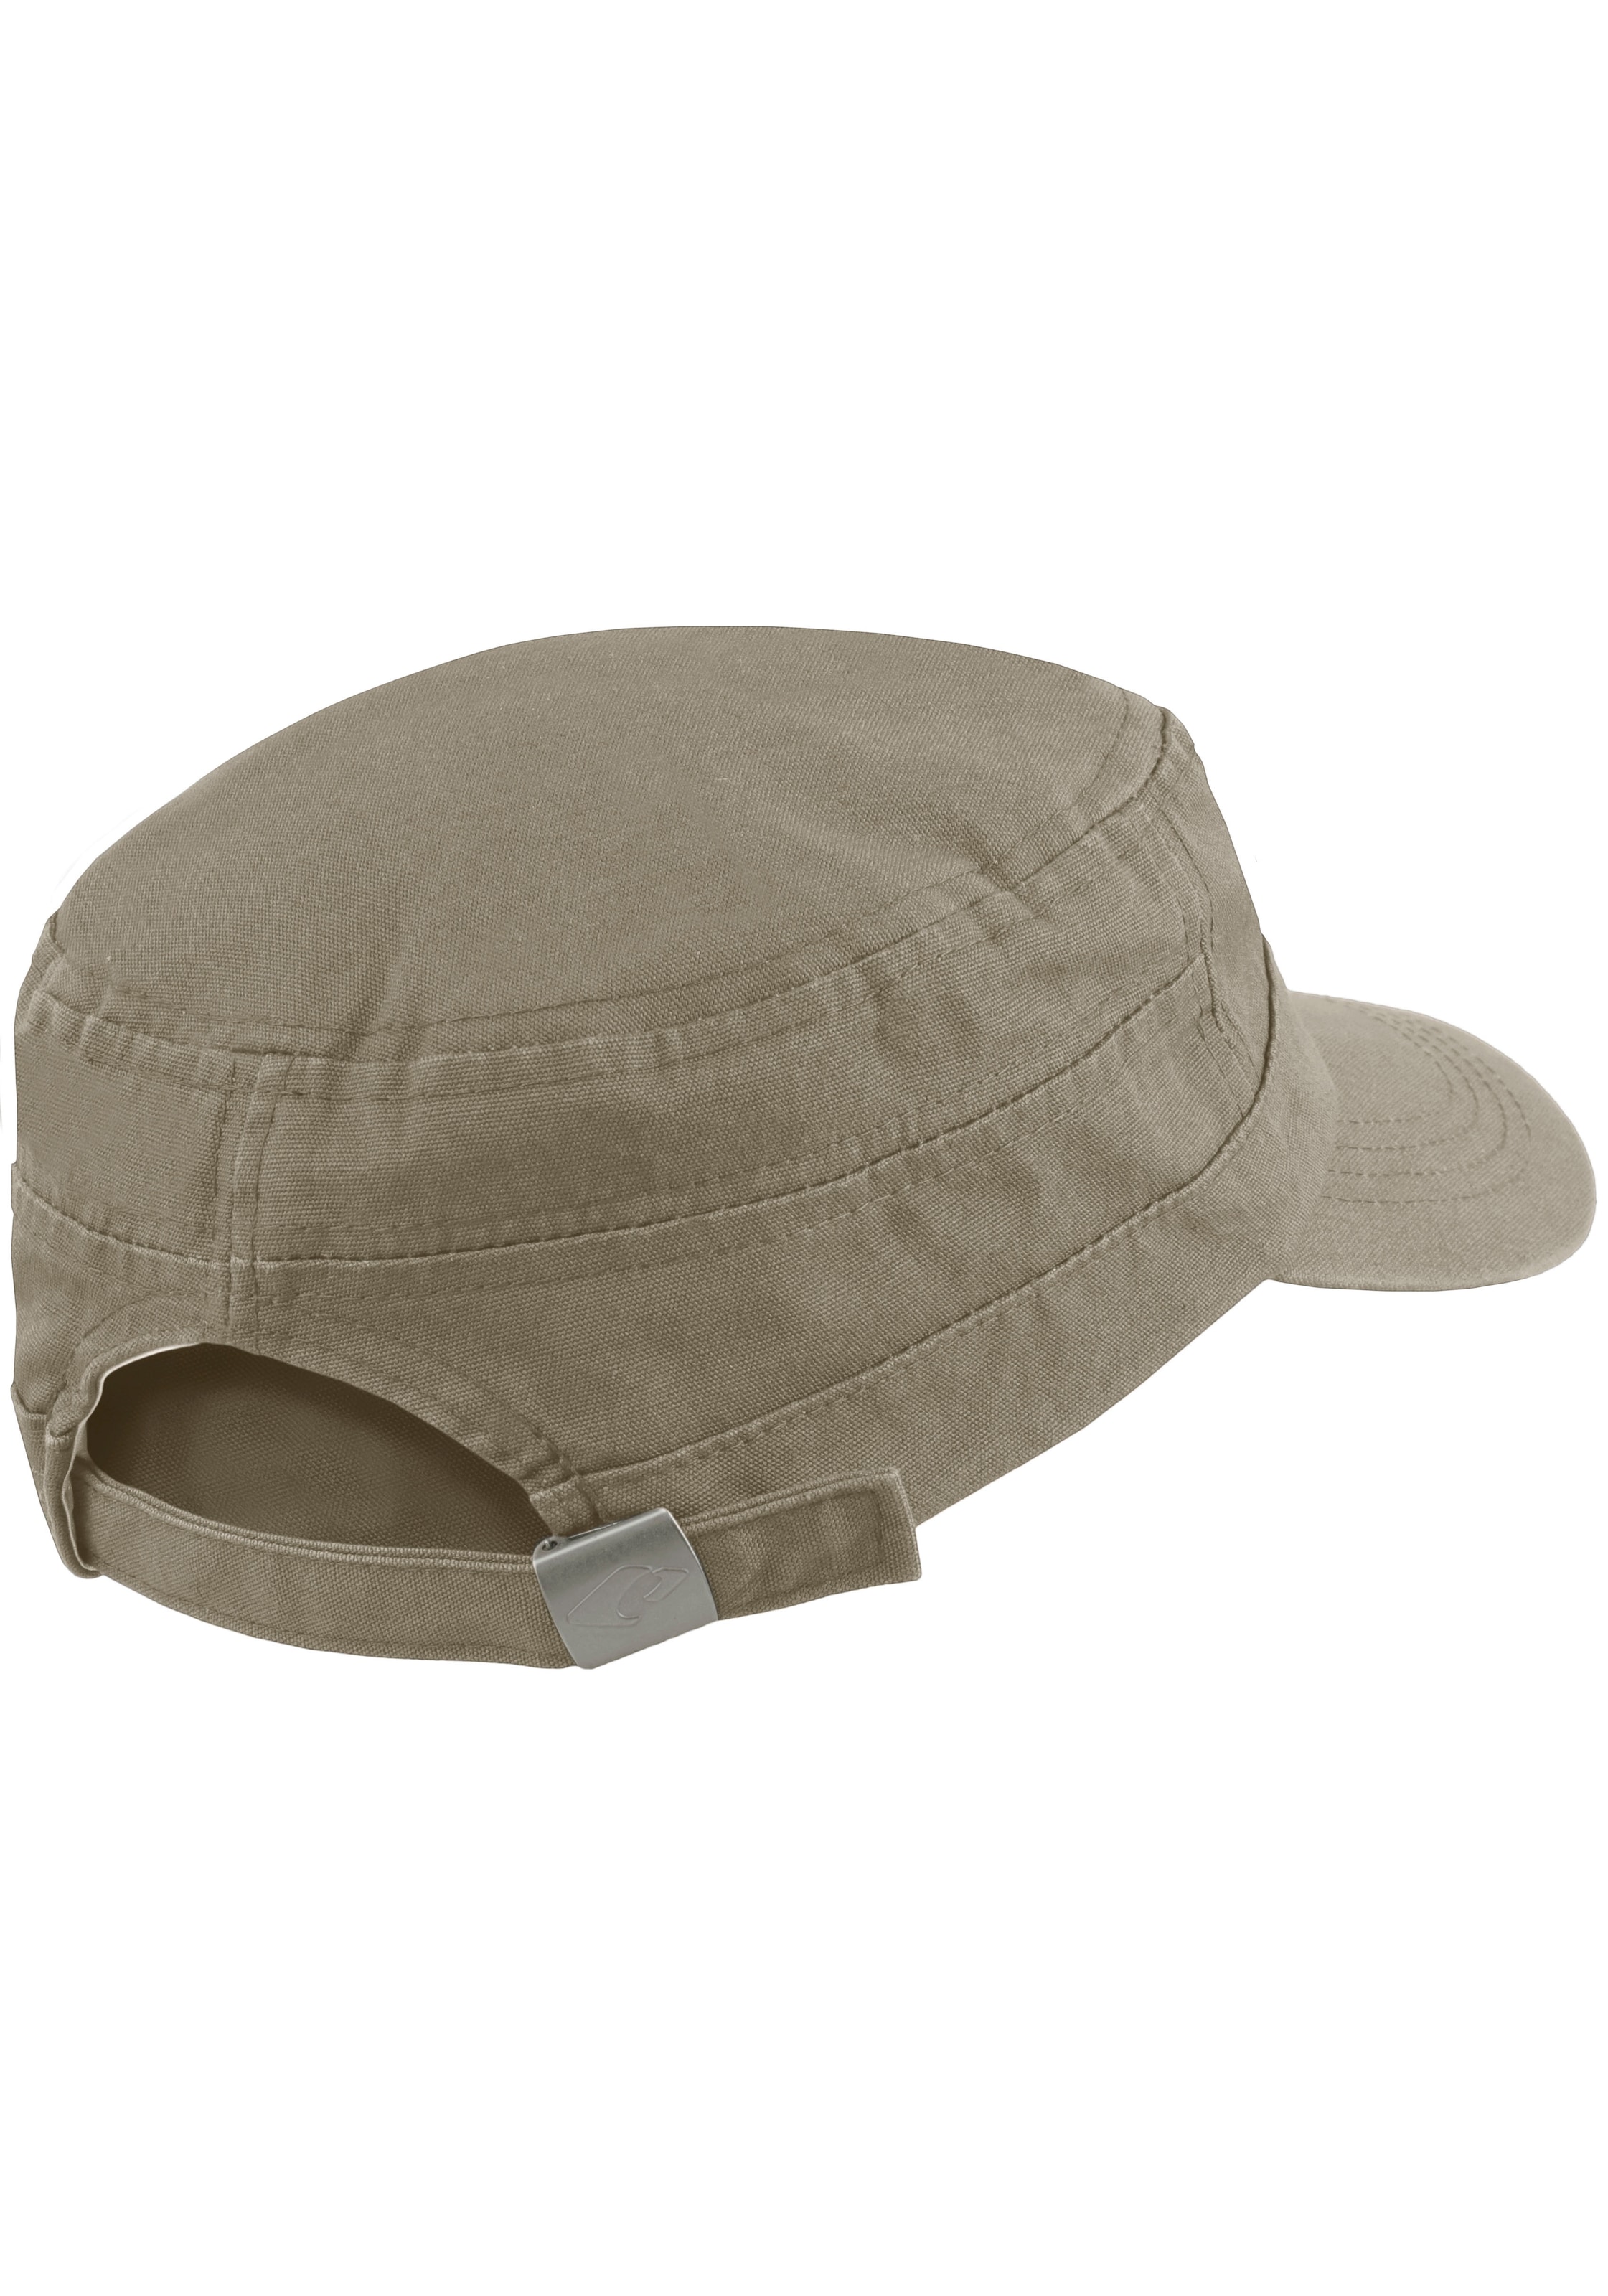 chillouts Army Cap Paso »El Hat« bei